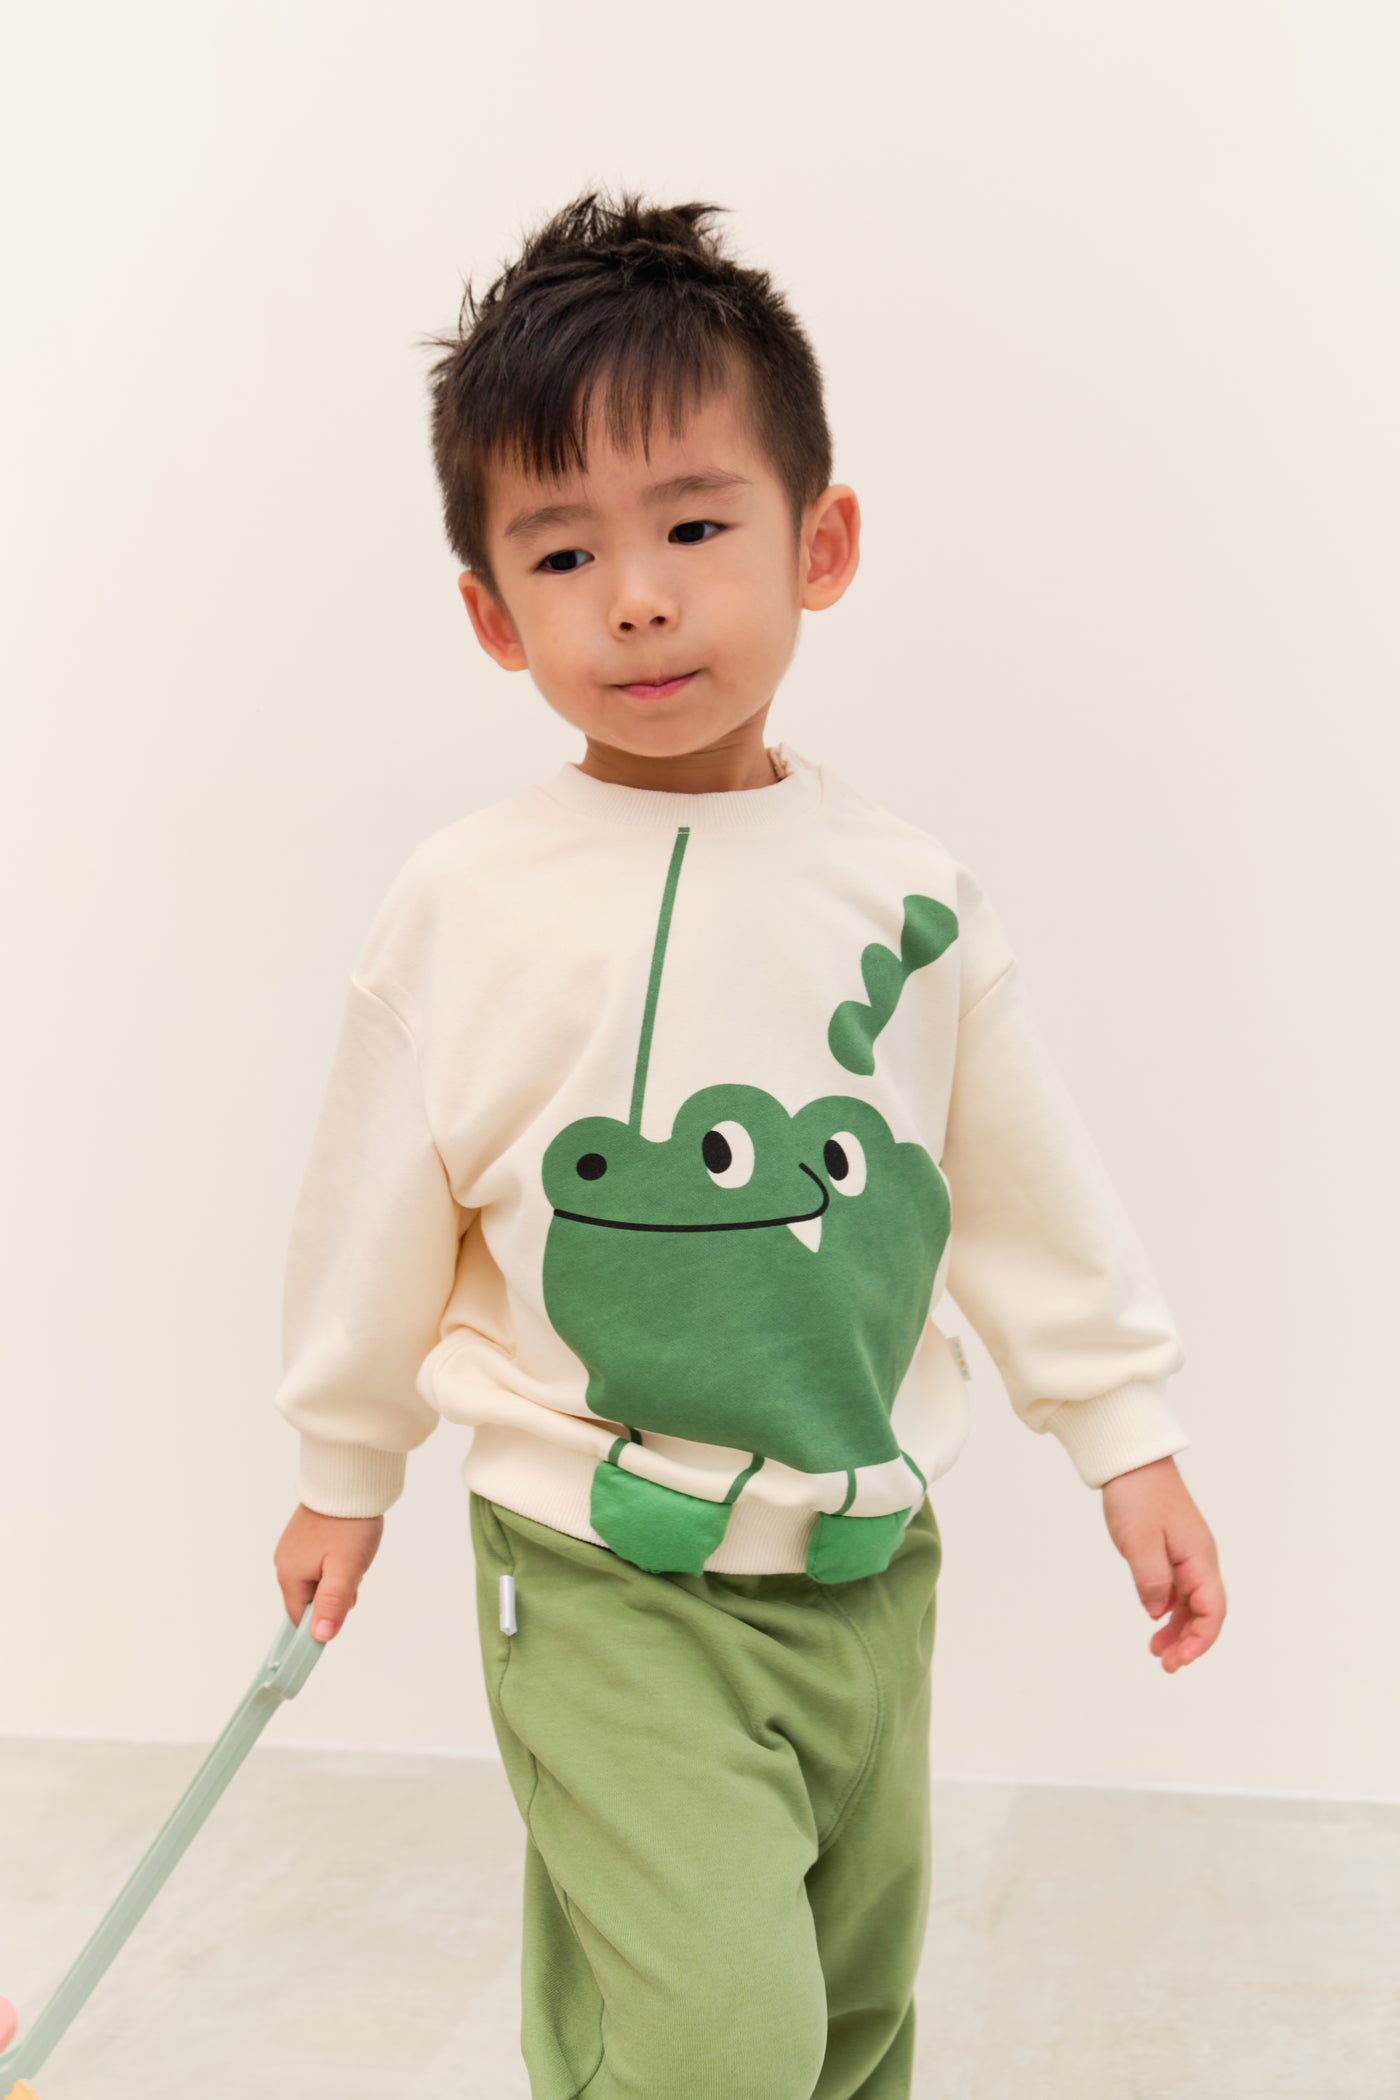 On Adventures Sweater & Pants Set Croc